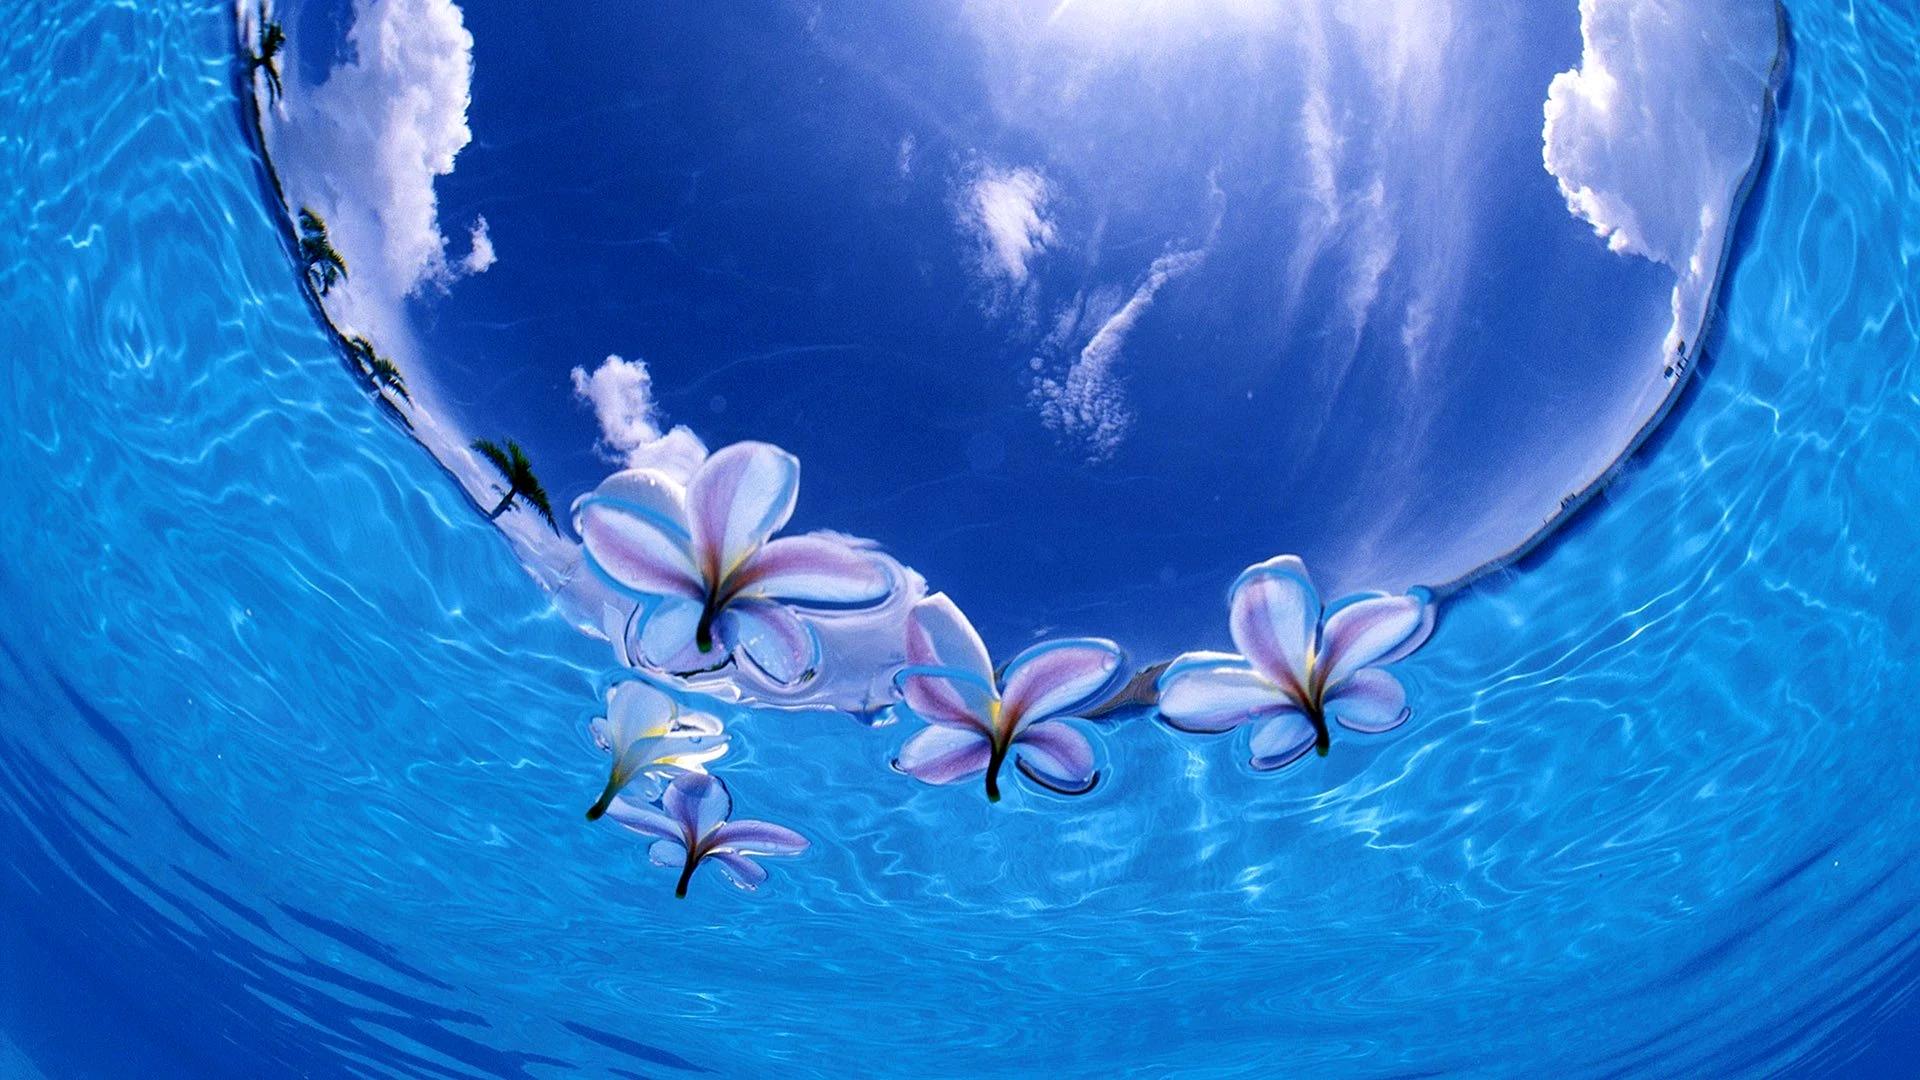 Flower Water Background Wallpaper